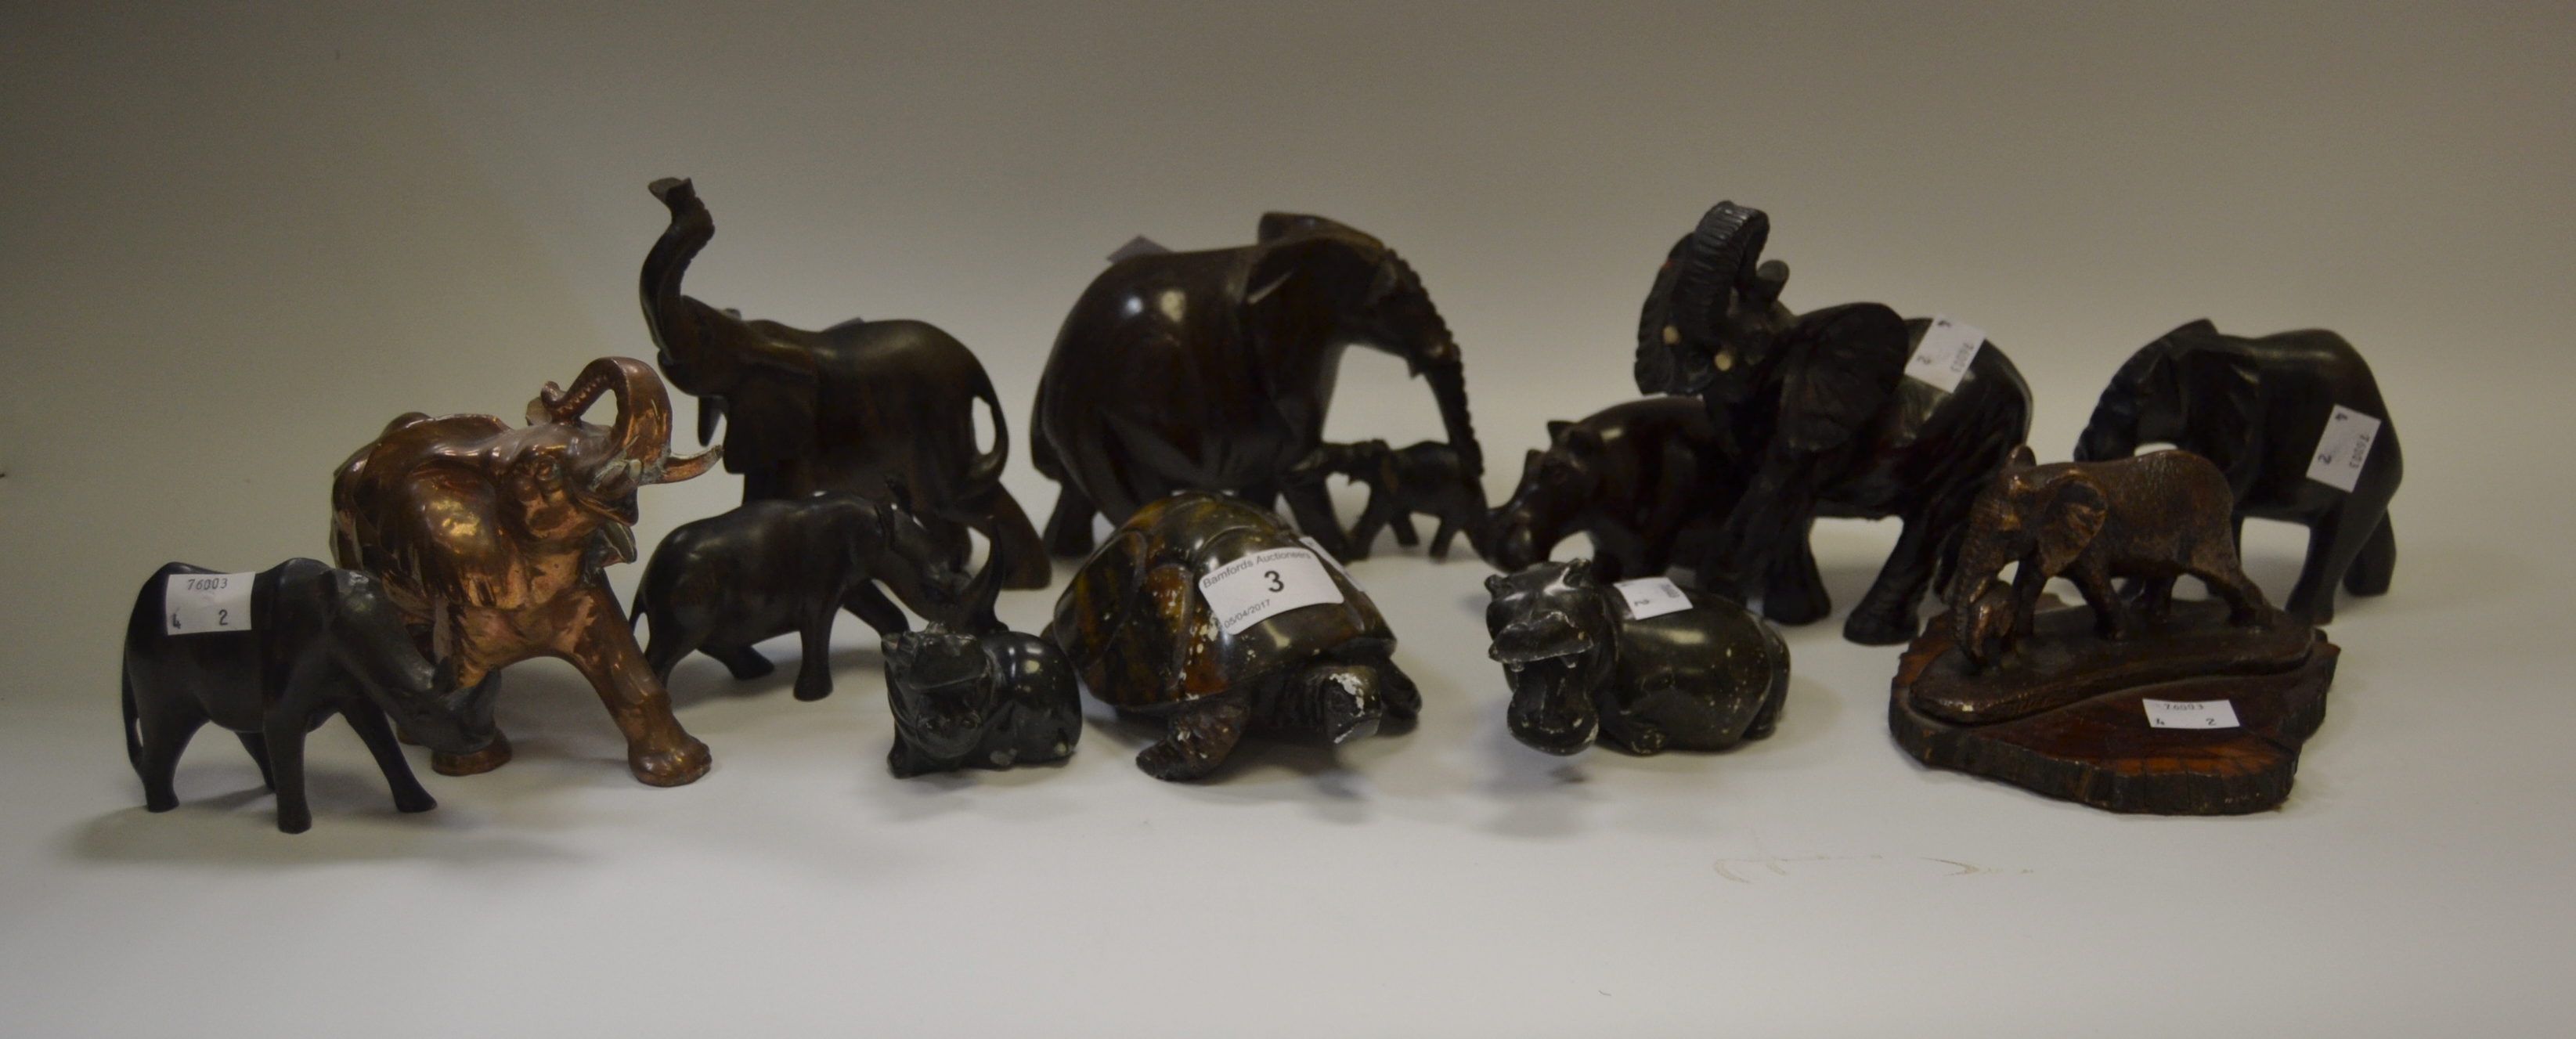 Tribal Art - hardwood carvings of Elephants,